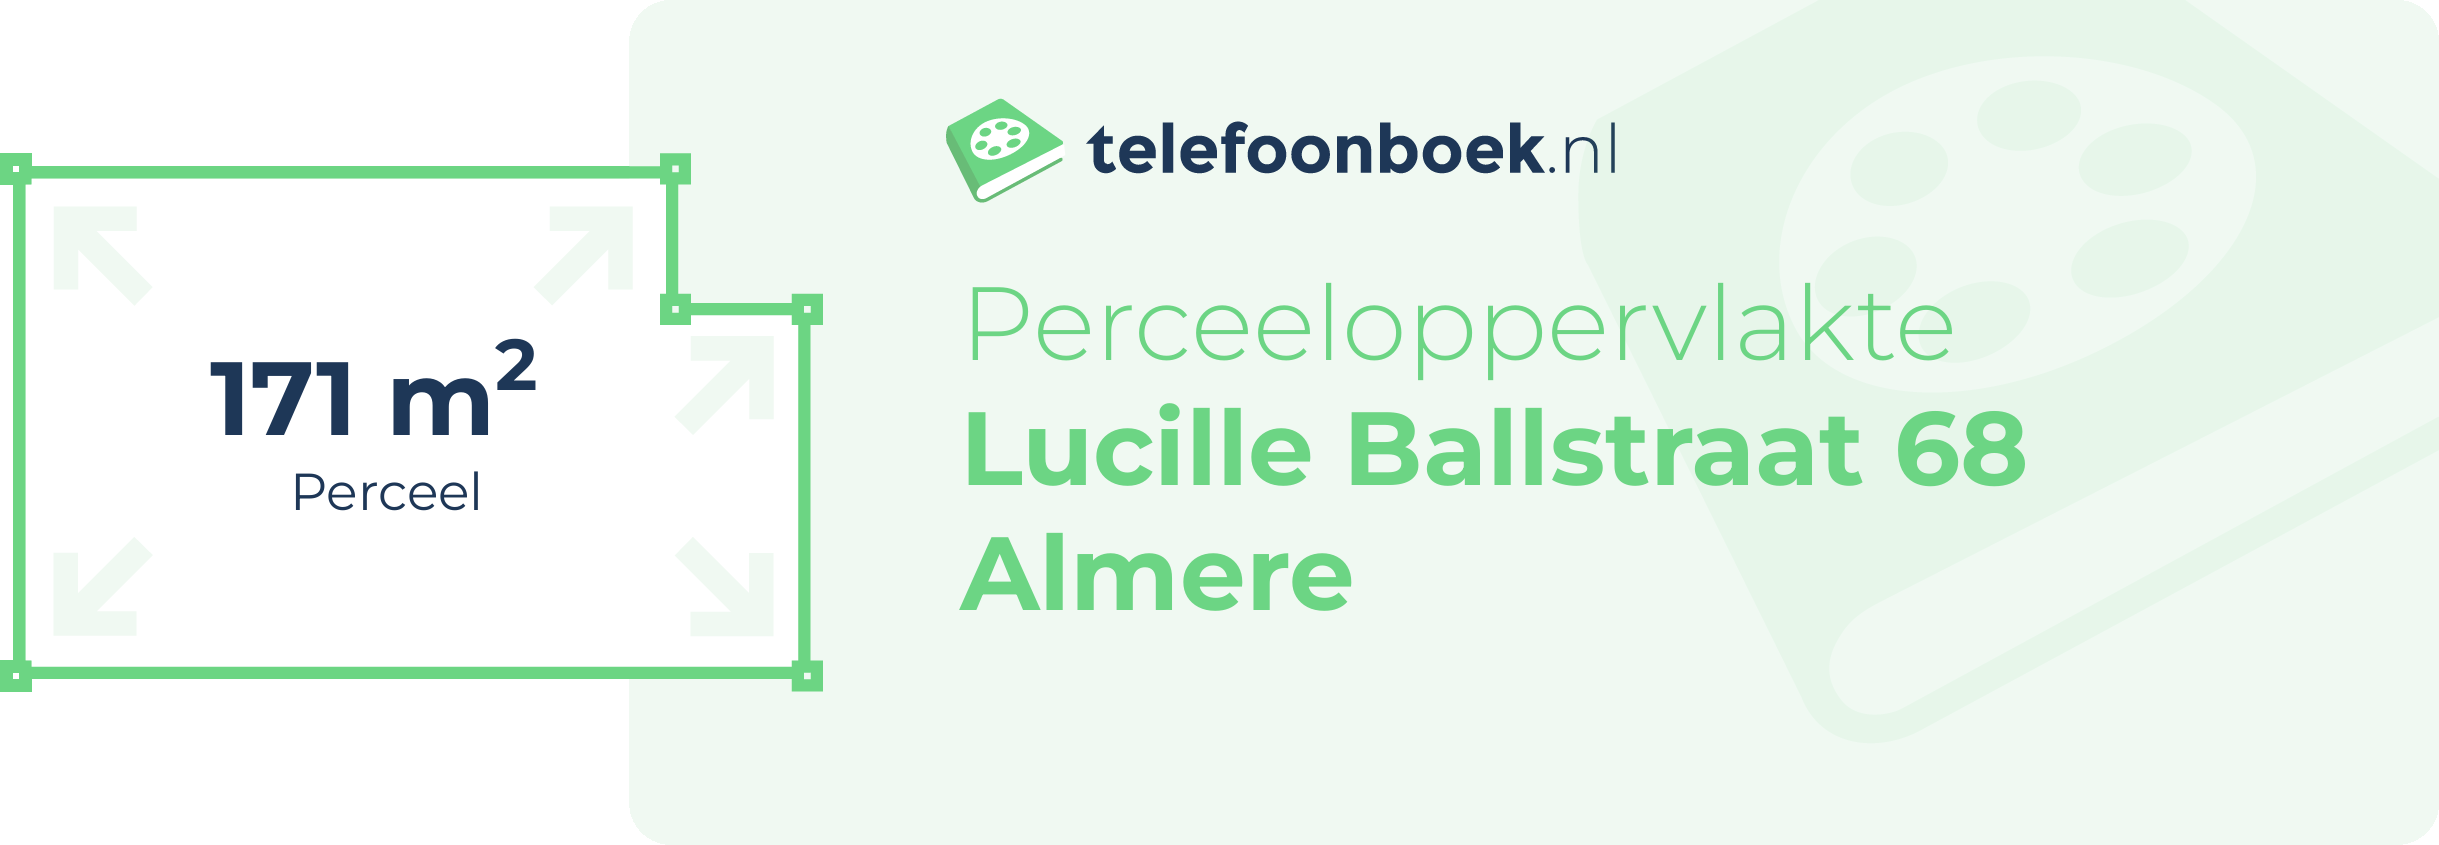 Perceeloppervlakte Lucille Ballstraat 68 Almere